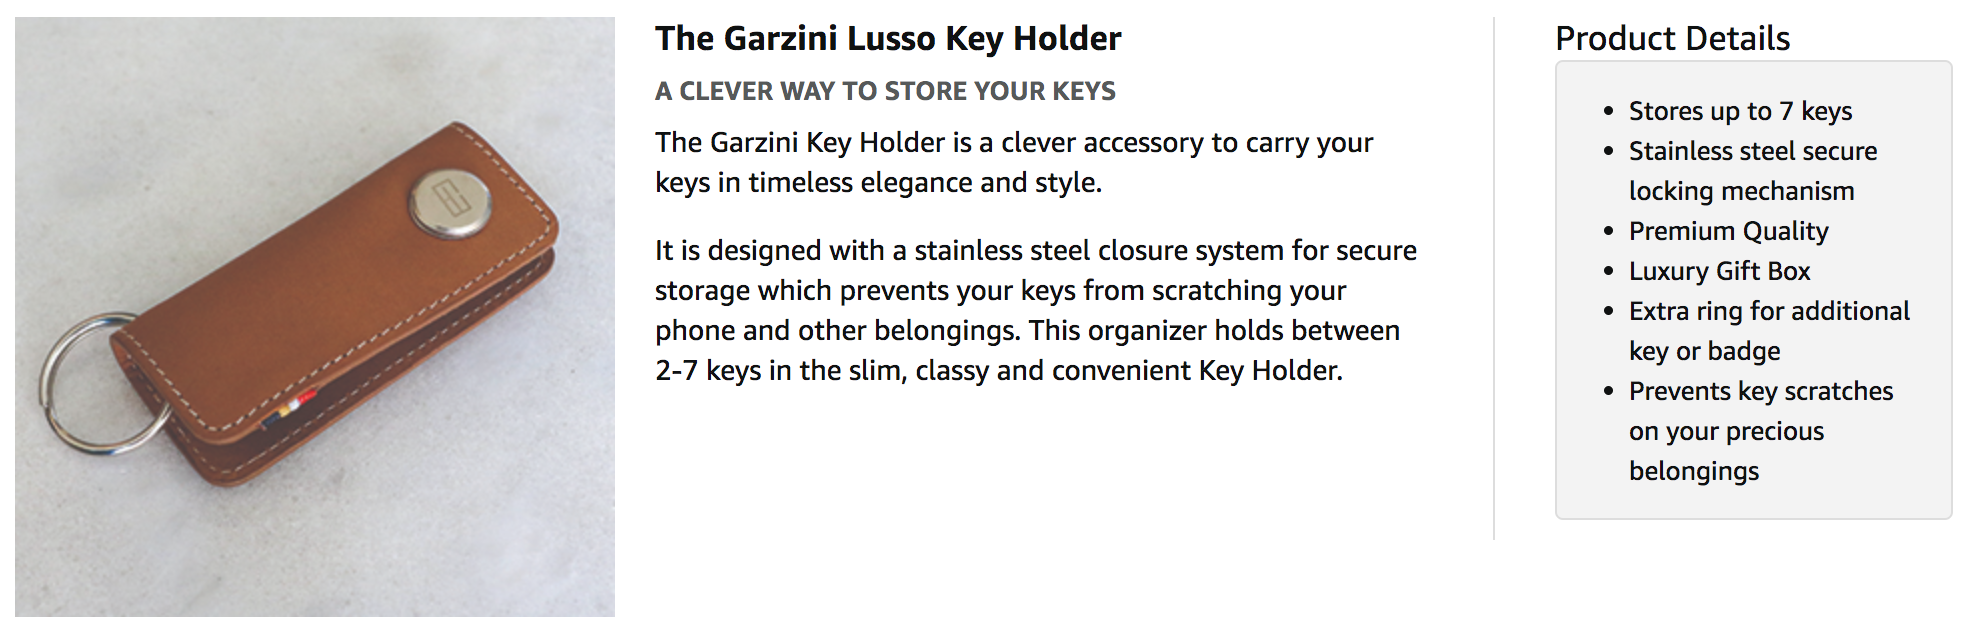 Lusso Key Holder - Garzini Lusso